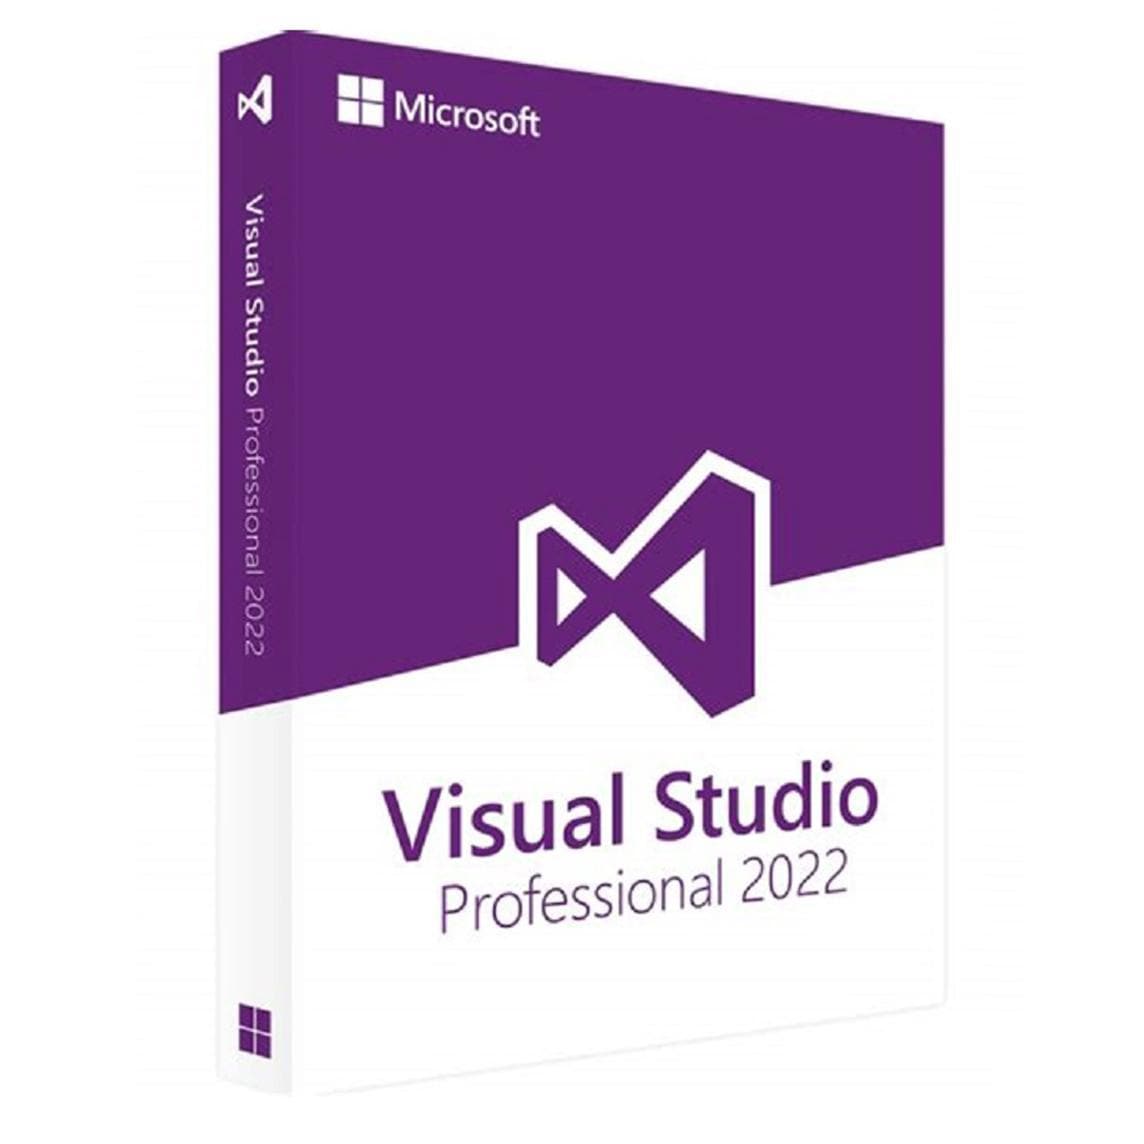 Microsoft Visual Studio 2022 Pro - מבצע שדרוג - EXON - גיימינג ותוכנות - משחקים ותוכנות למחשב ולאקס בוקס!